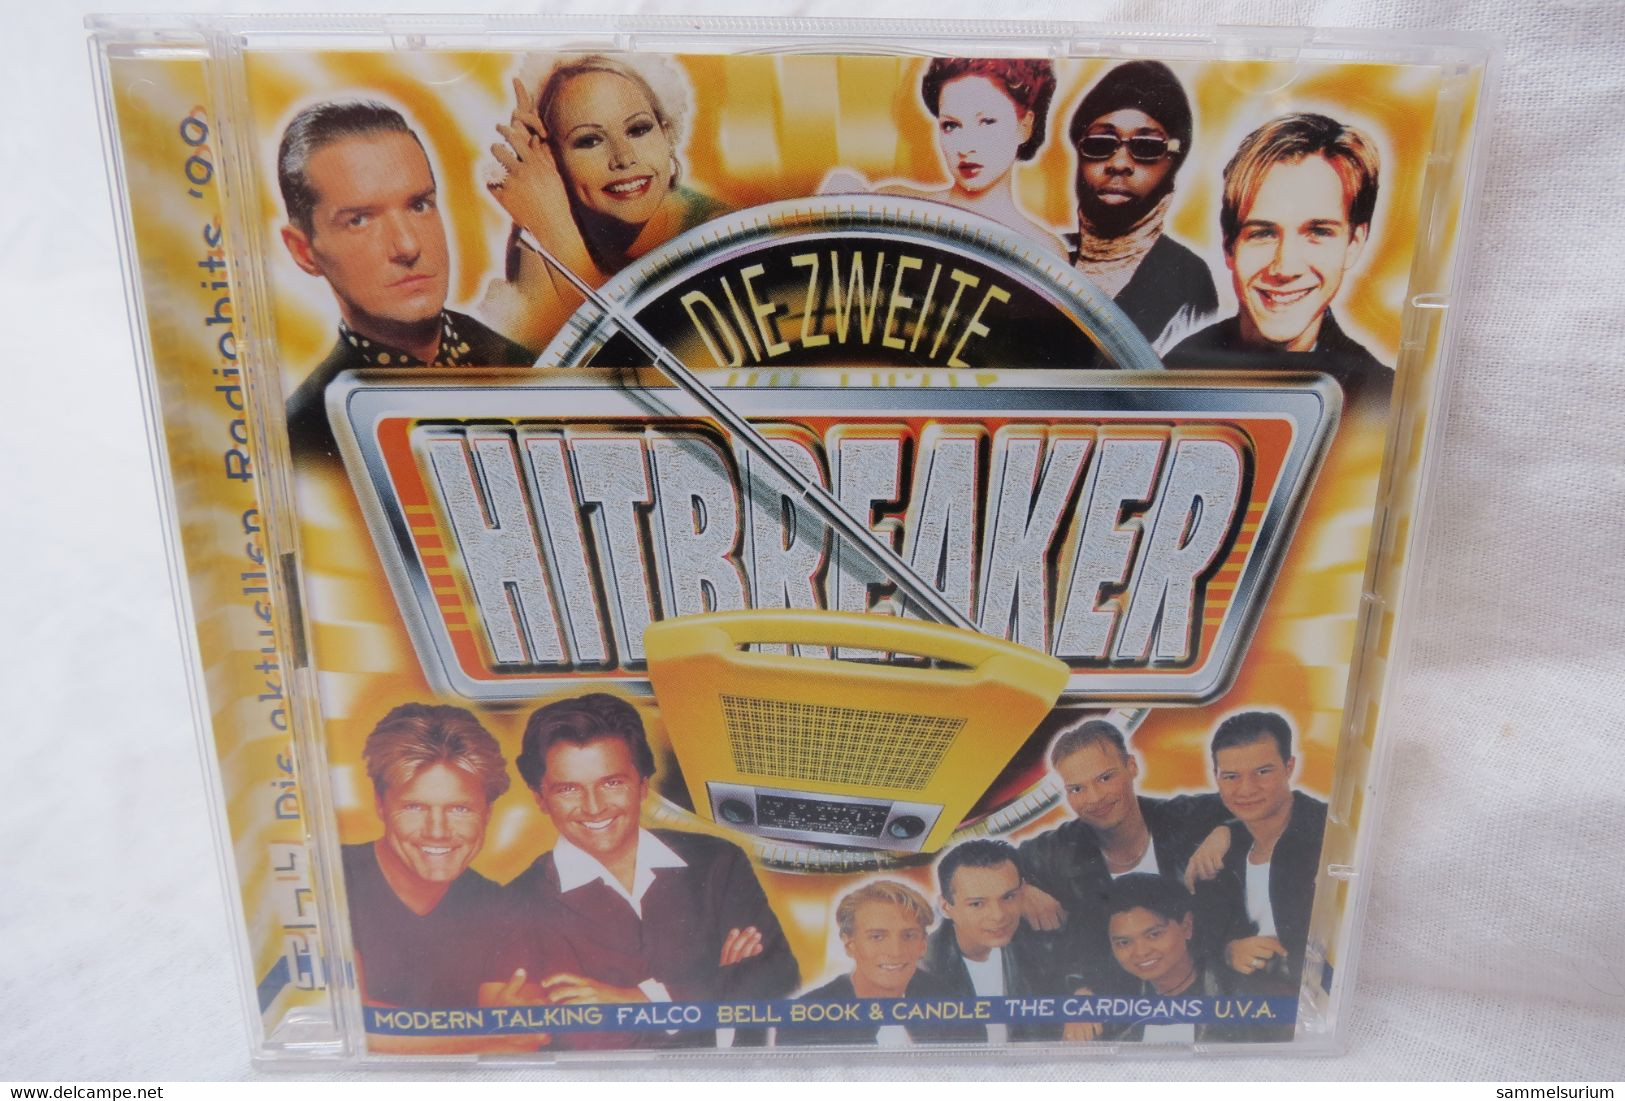 2 CDs "Die Zweite Hitbreaker" Die Aktuellen Radiohits '99 - Hit-Compilations